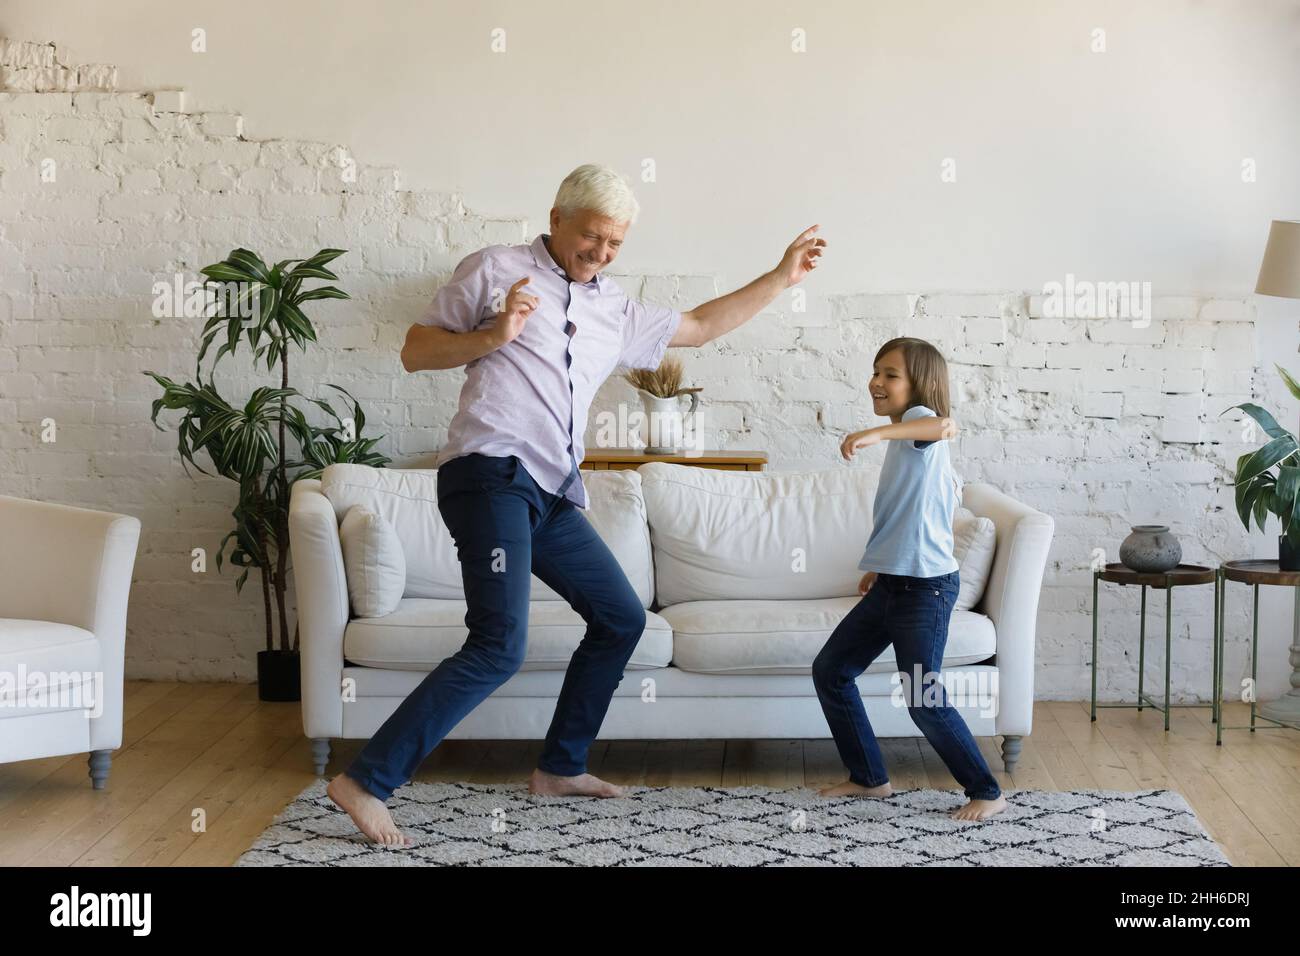 Happy active grandpa and cheerful grandkid dancing to music Stock Photo